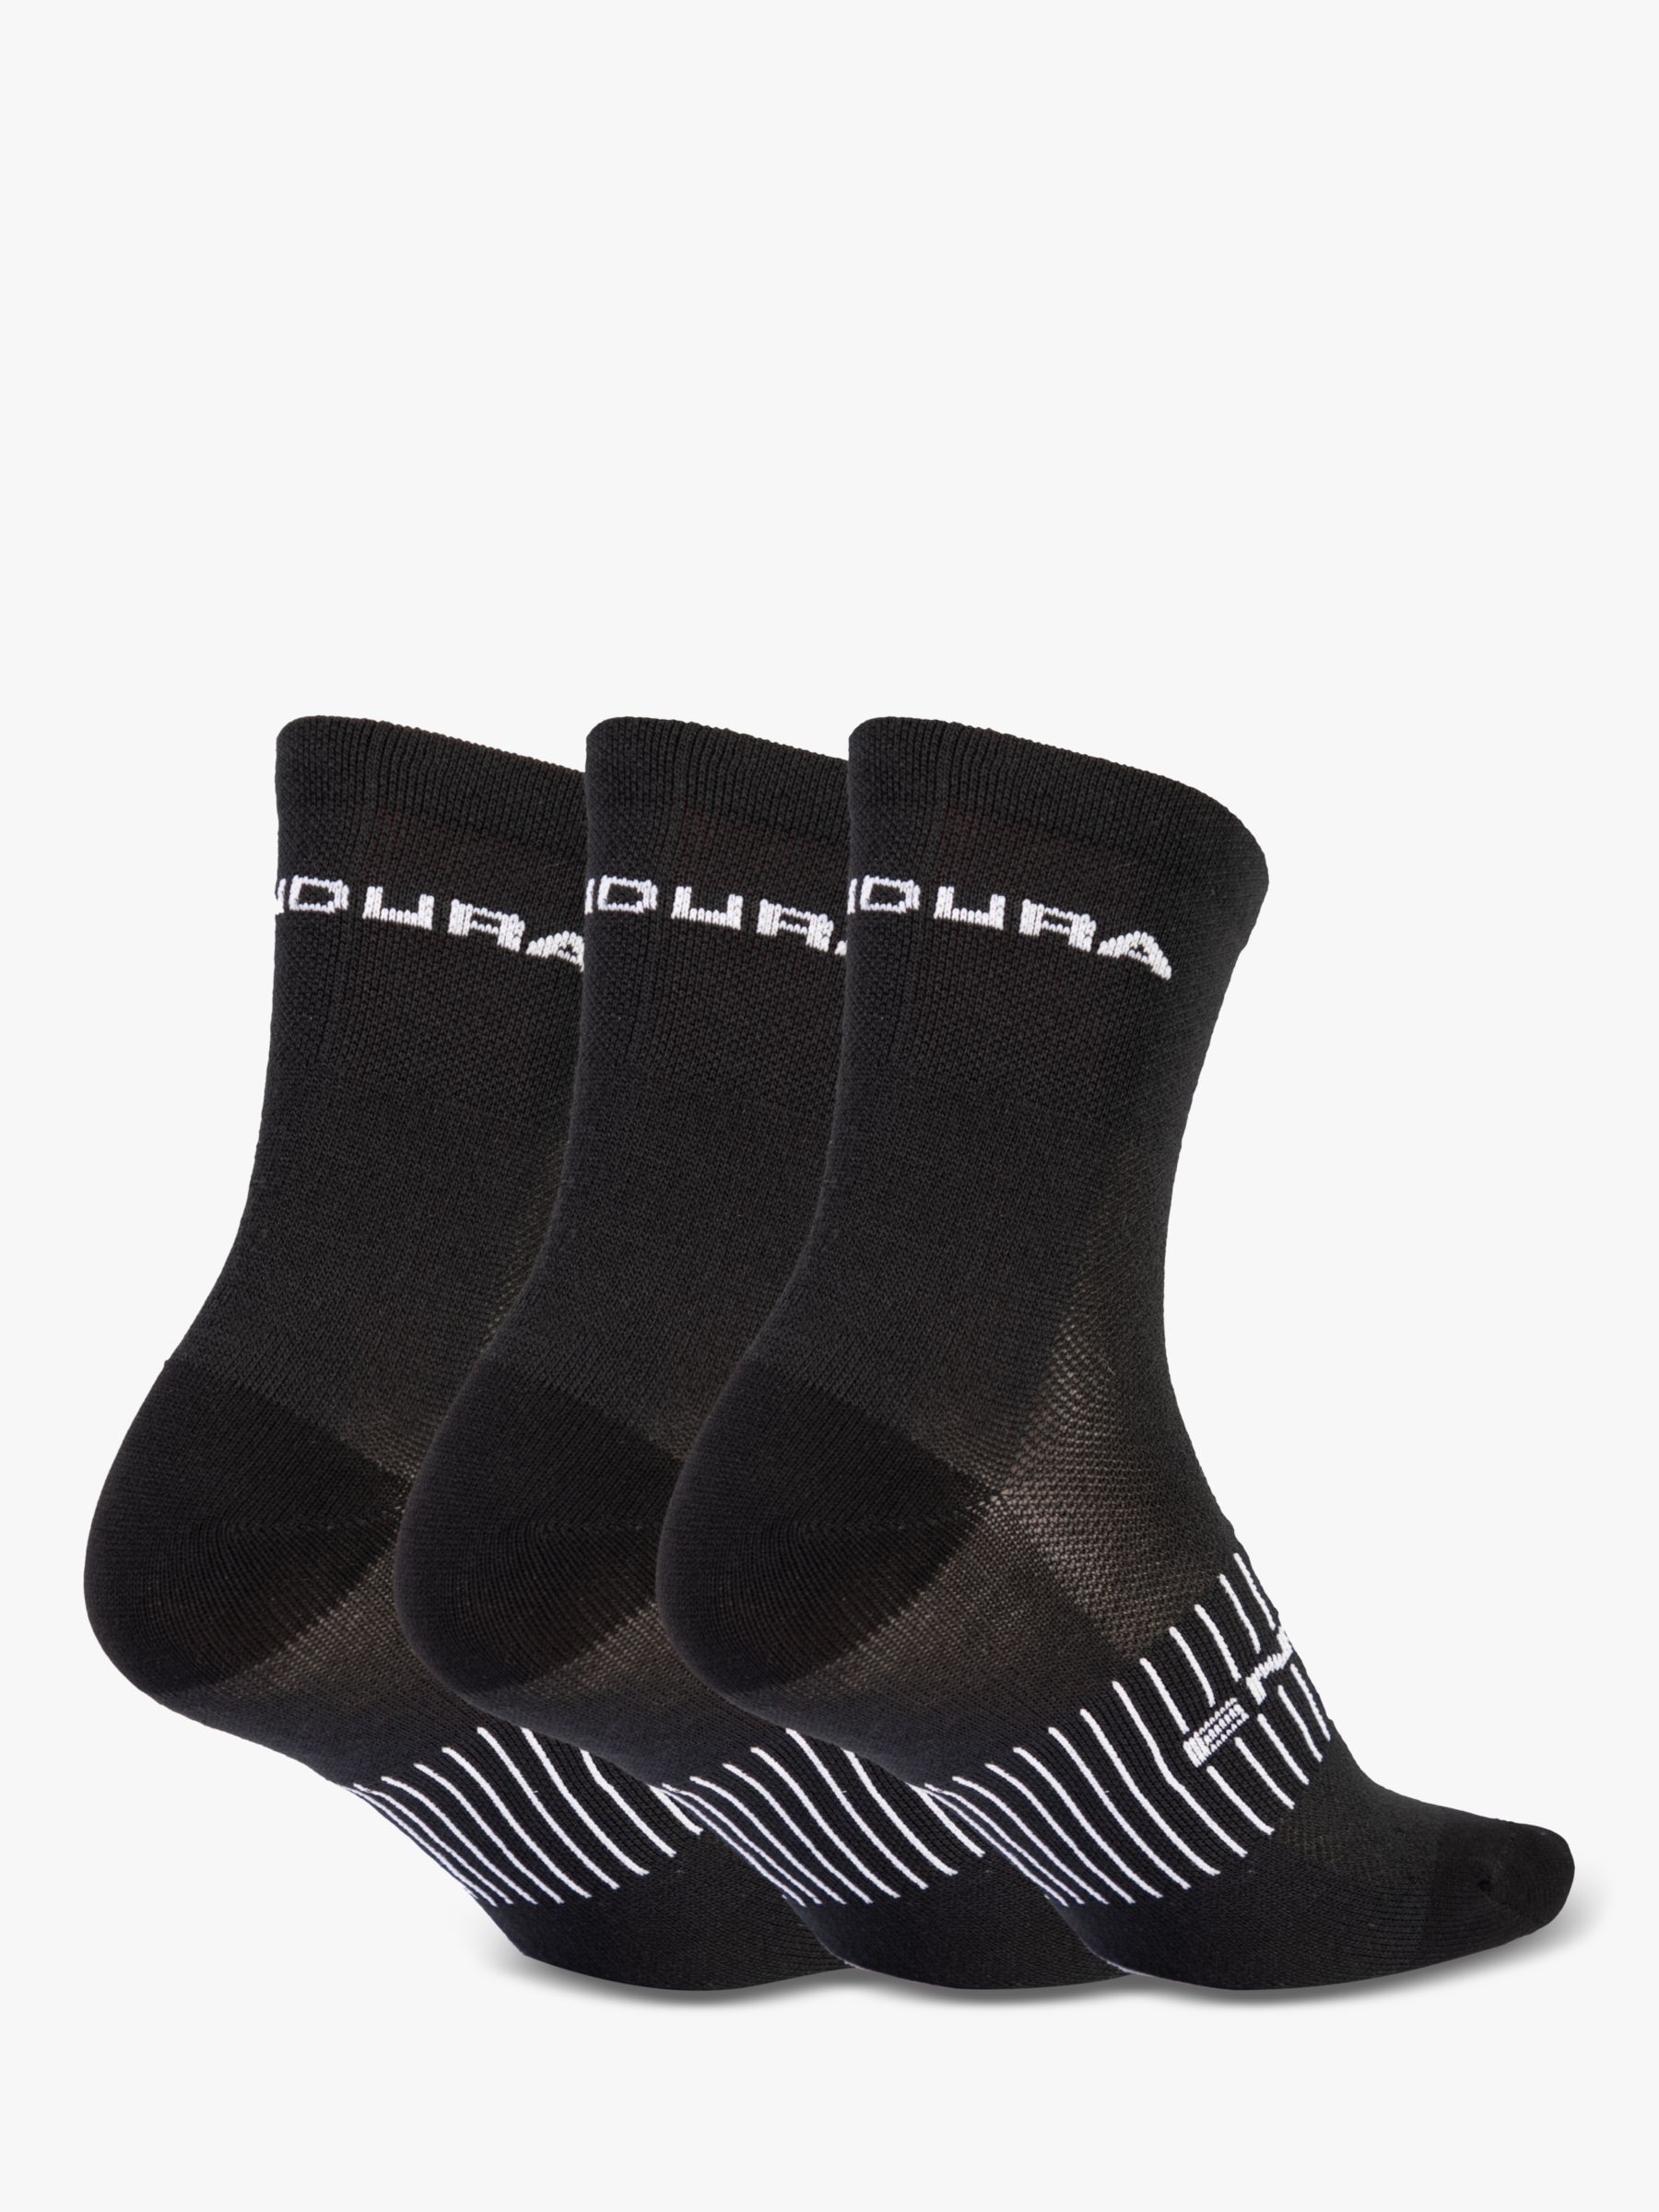 Endura Men's Coolmax Race Socks, Black, S/M